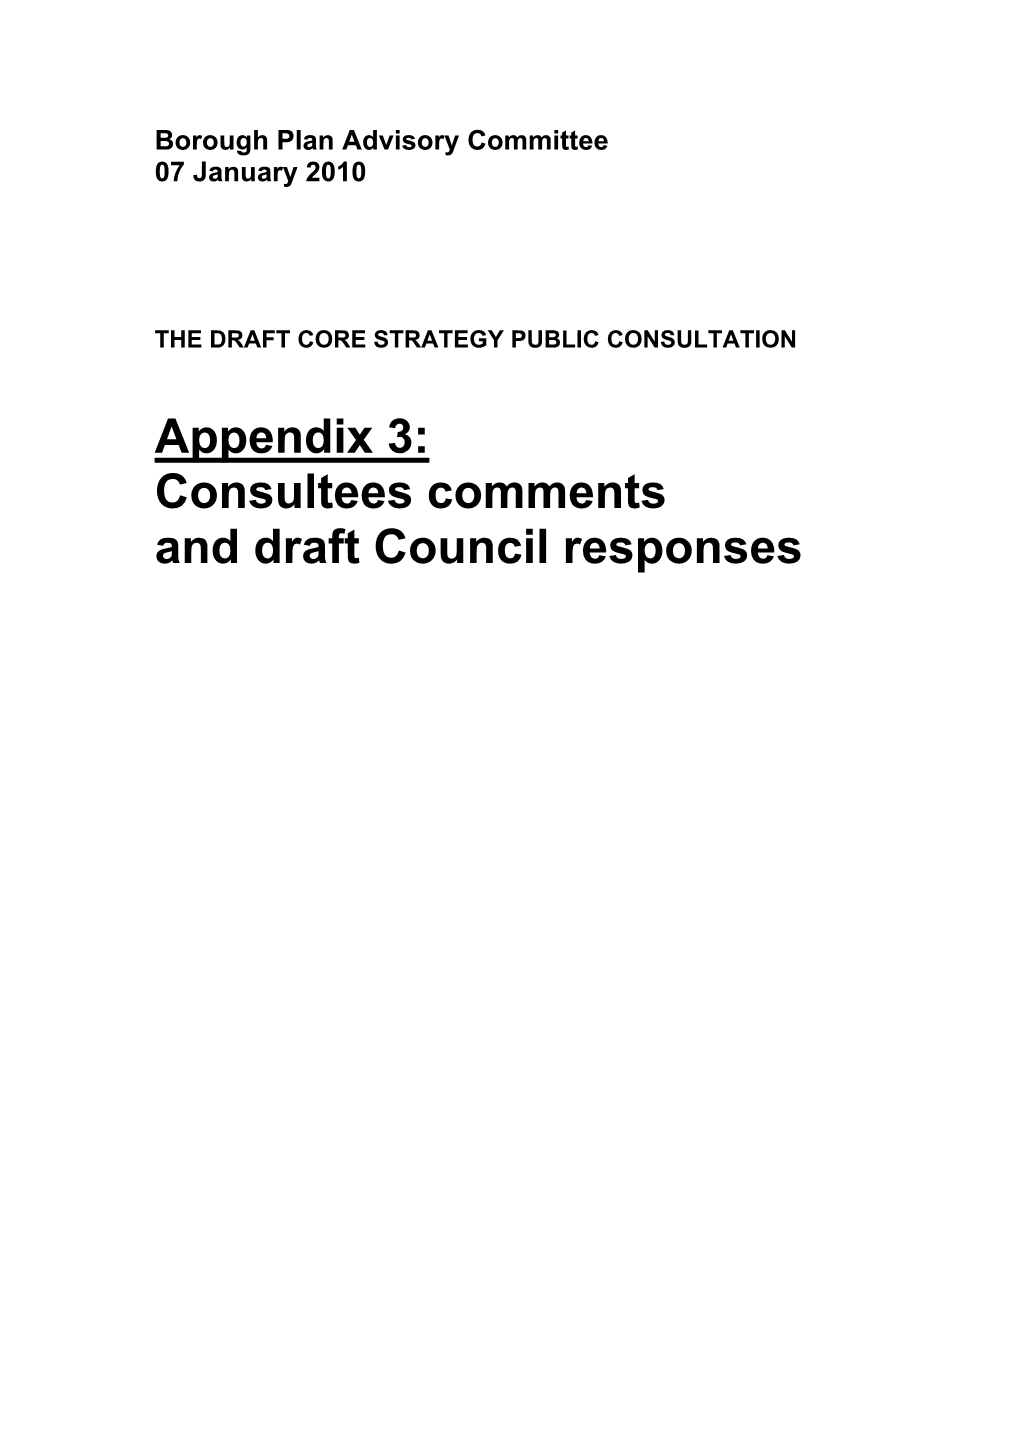 Borough Plan Advisory Committee 07 January 2010